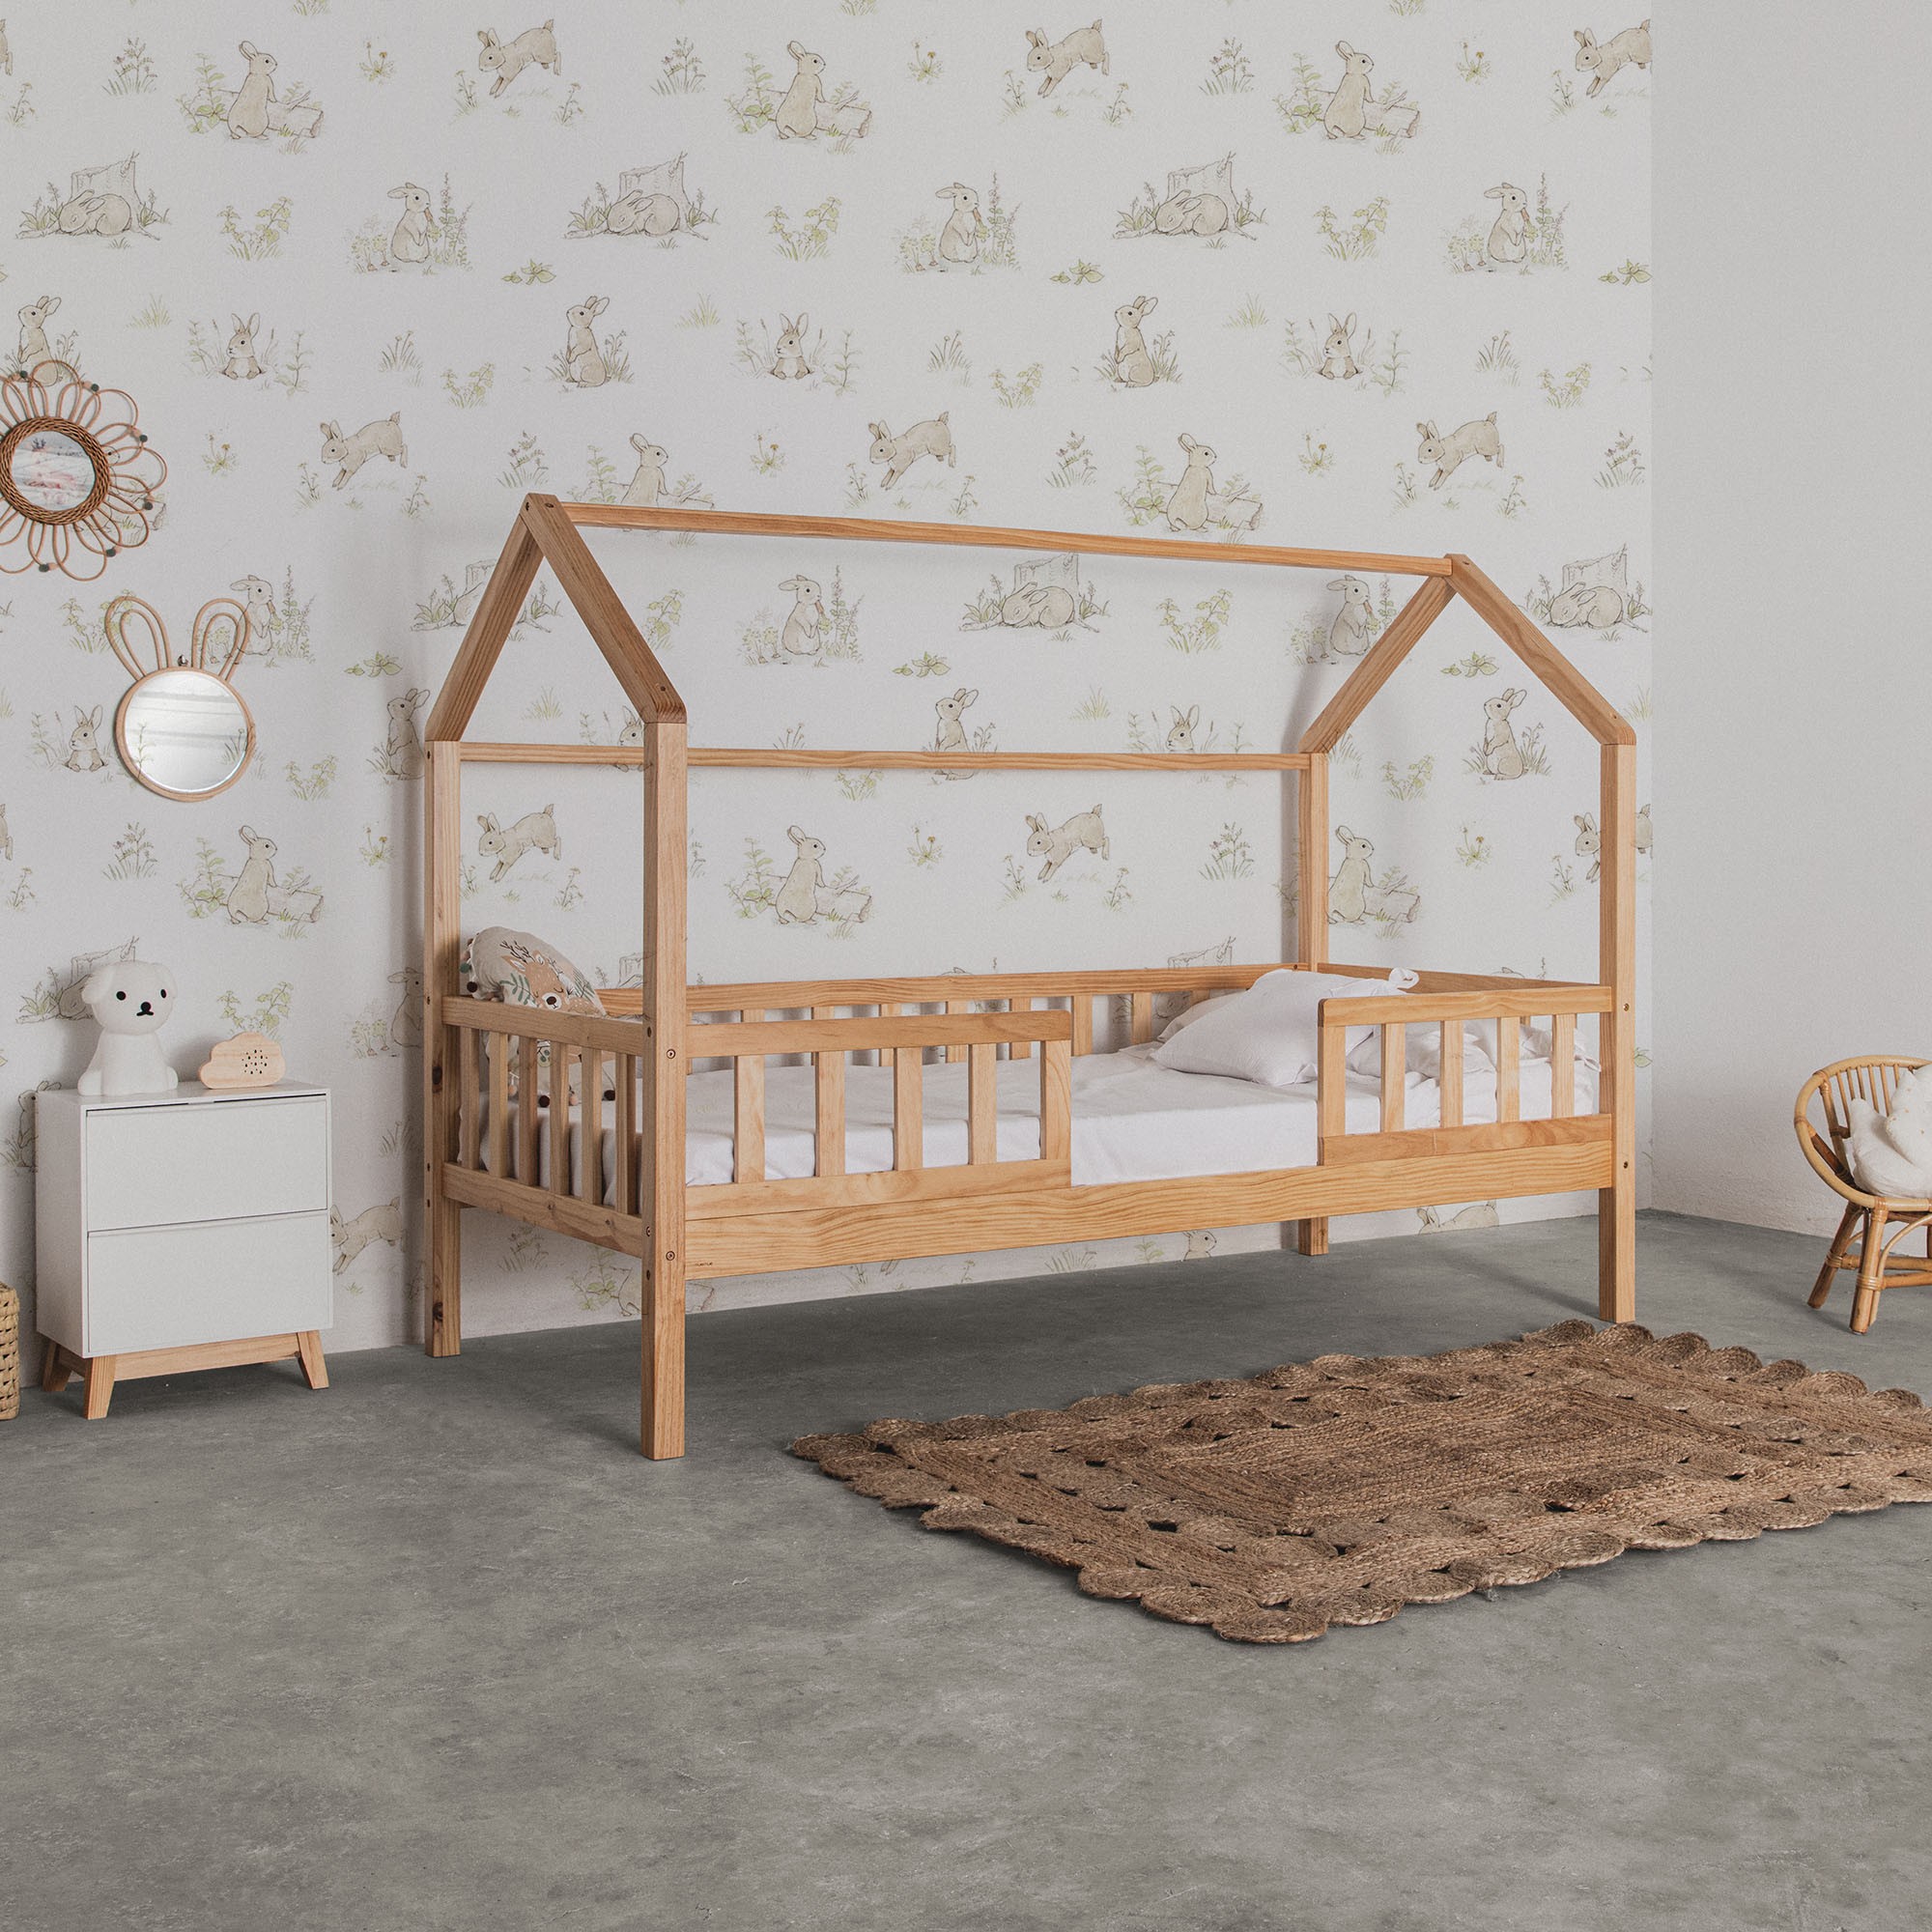 Buy Cama Infantil Montessori casita con barandilla